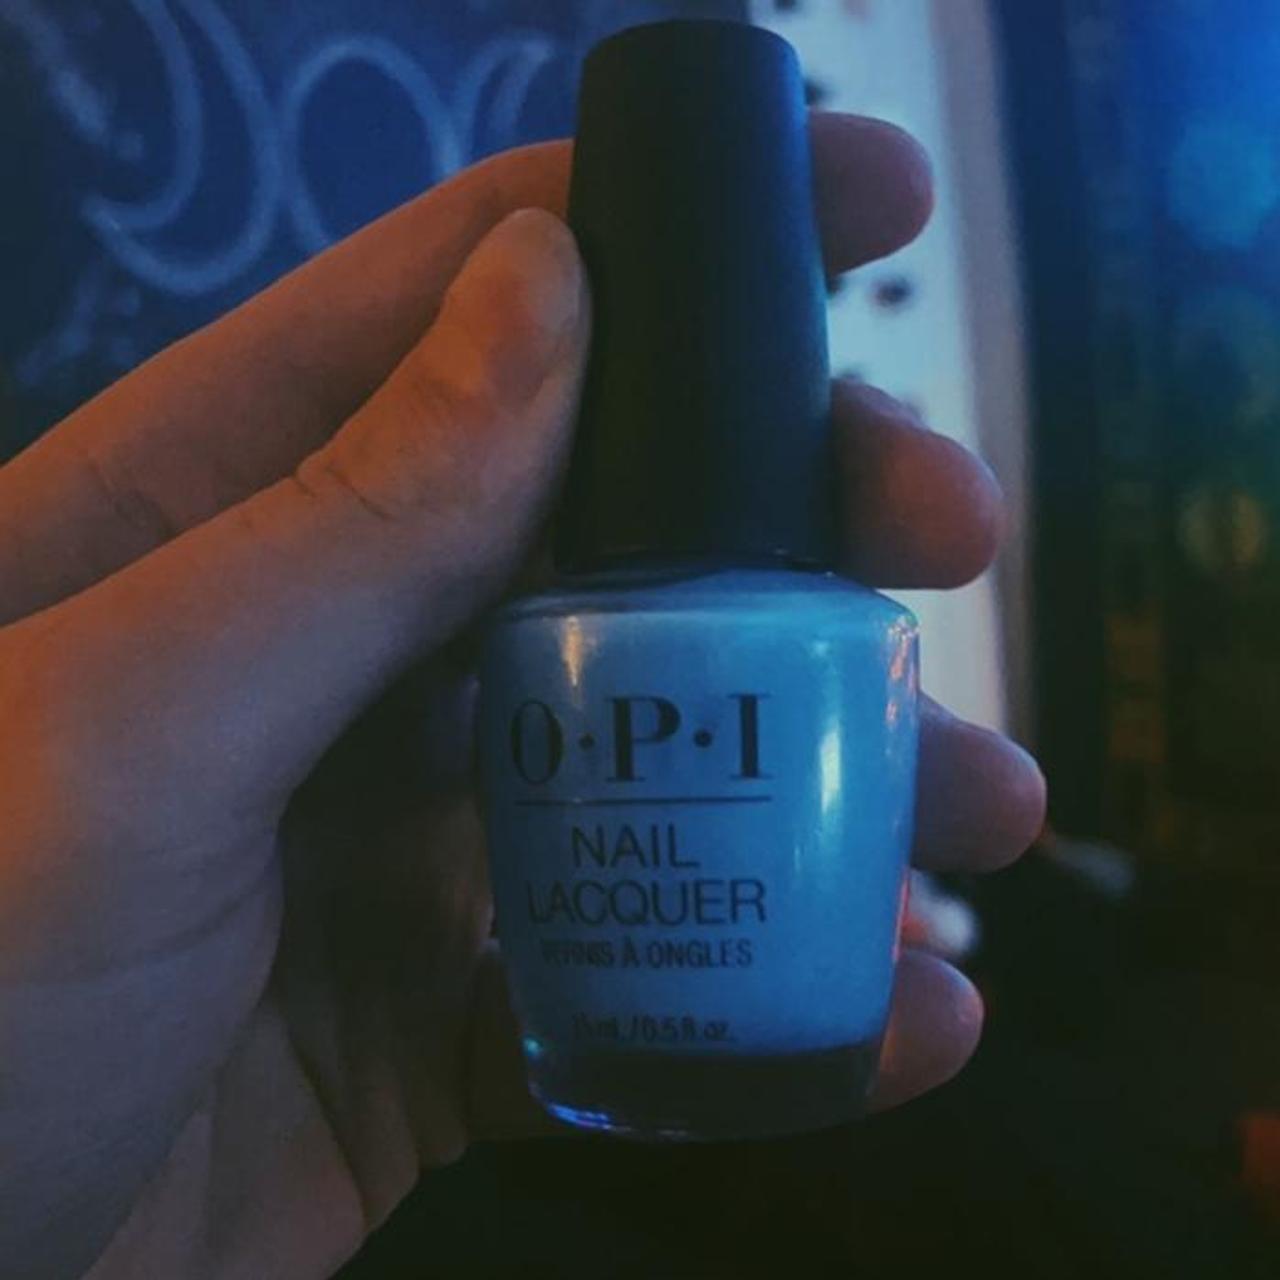 OPI Blue Nails